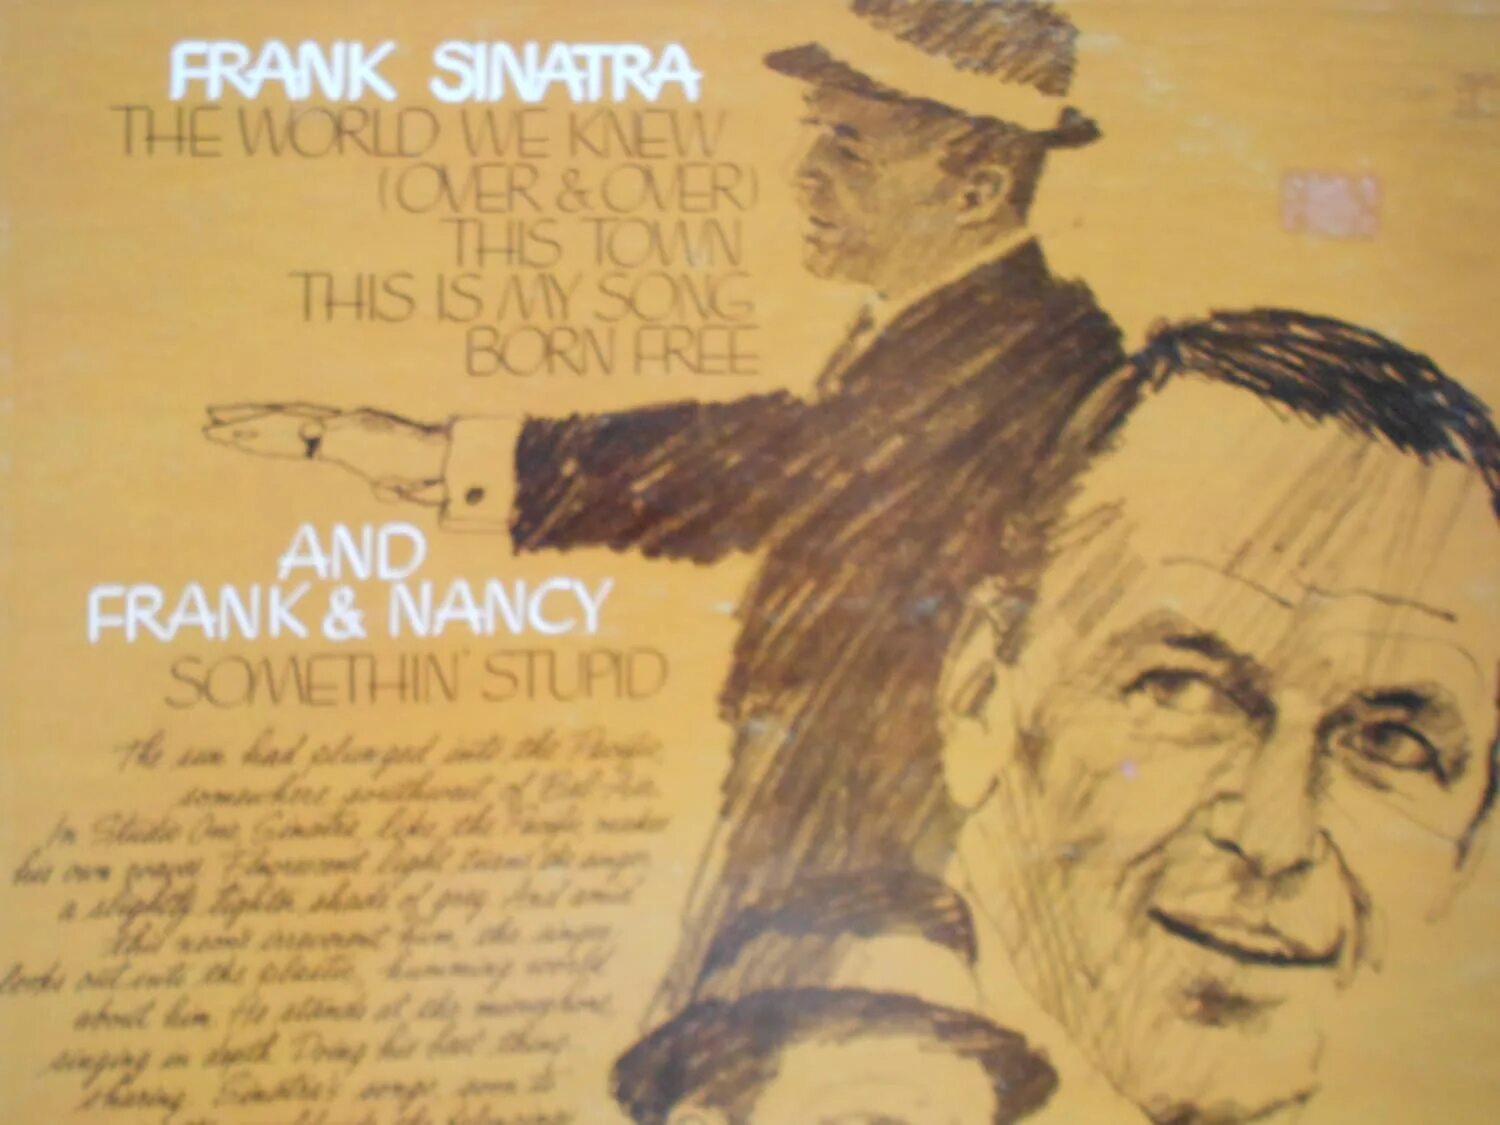 Frank Sinatra - the World we knew. Frank Sinatra the World we knew пластинка. The World we knew Frank Sinatra обложка. Frank Sinatra - the World we knew (1967) Ноты. Sinatra the world we